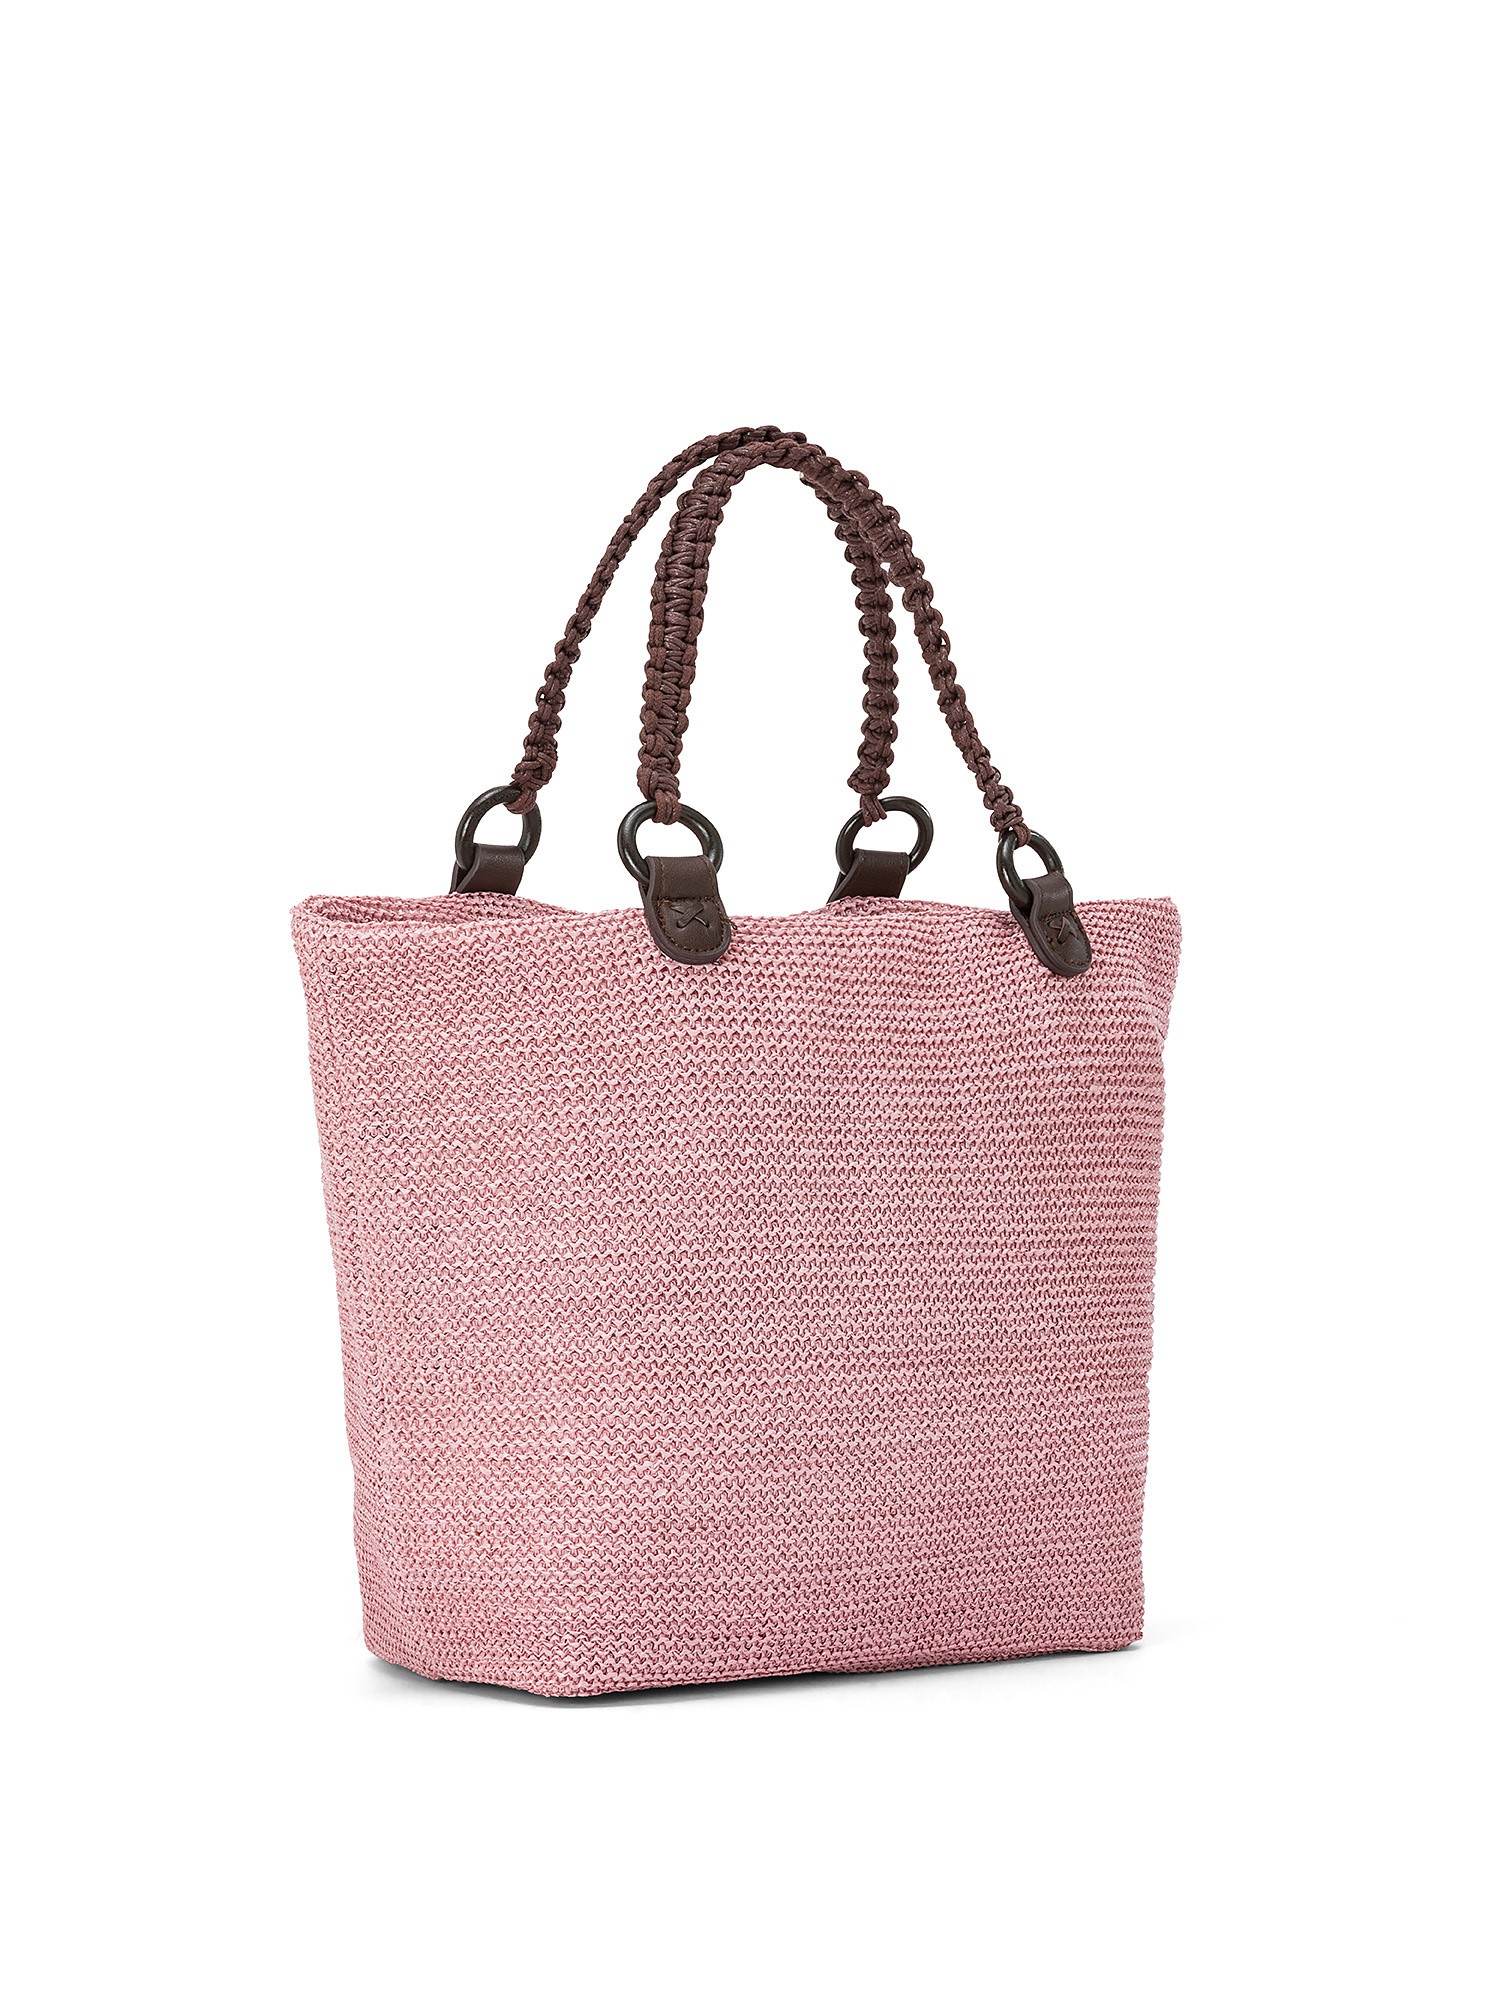 Koan - Shopping bag, Rosa, large image number 1